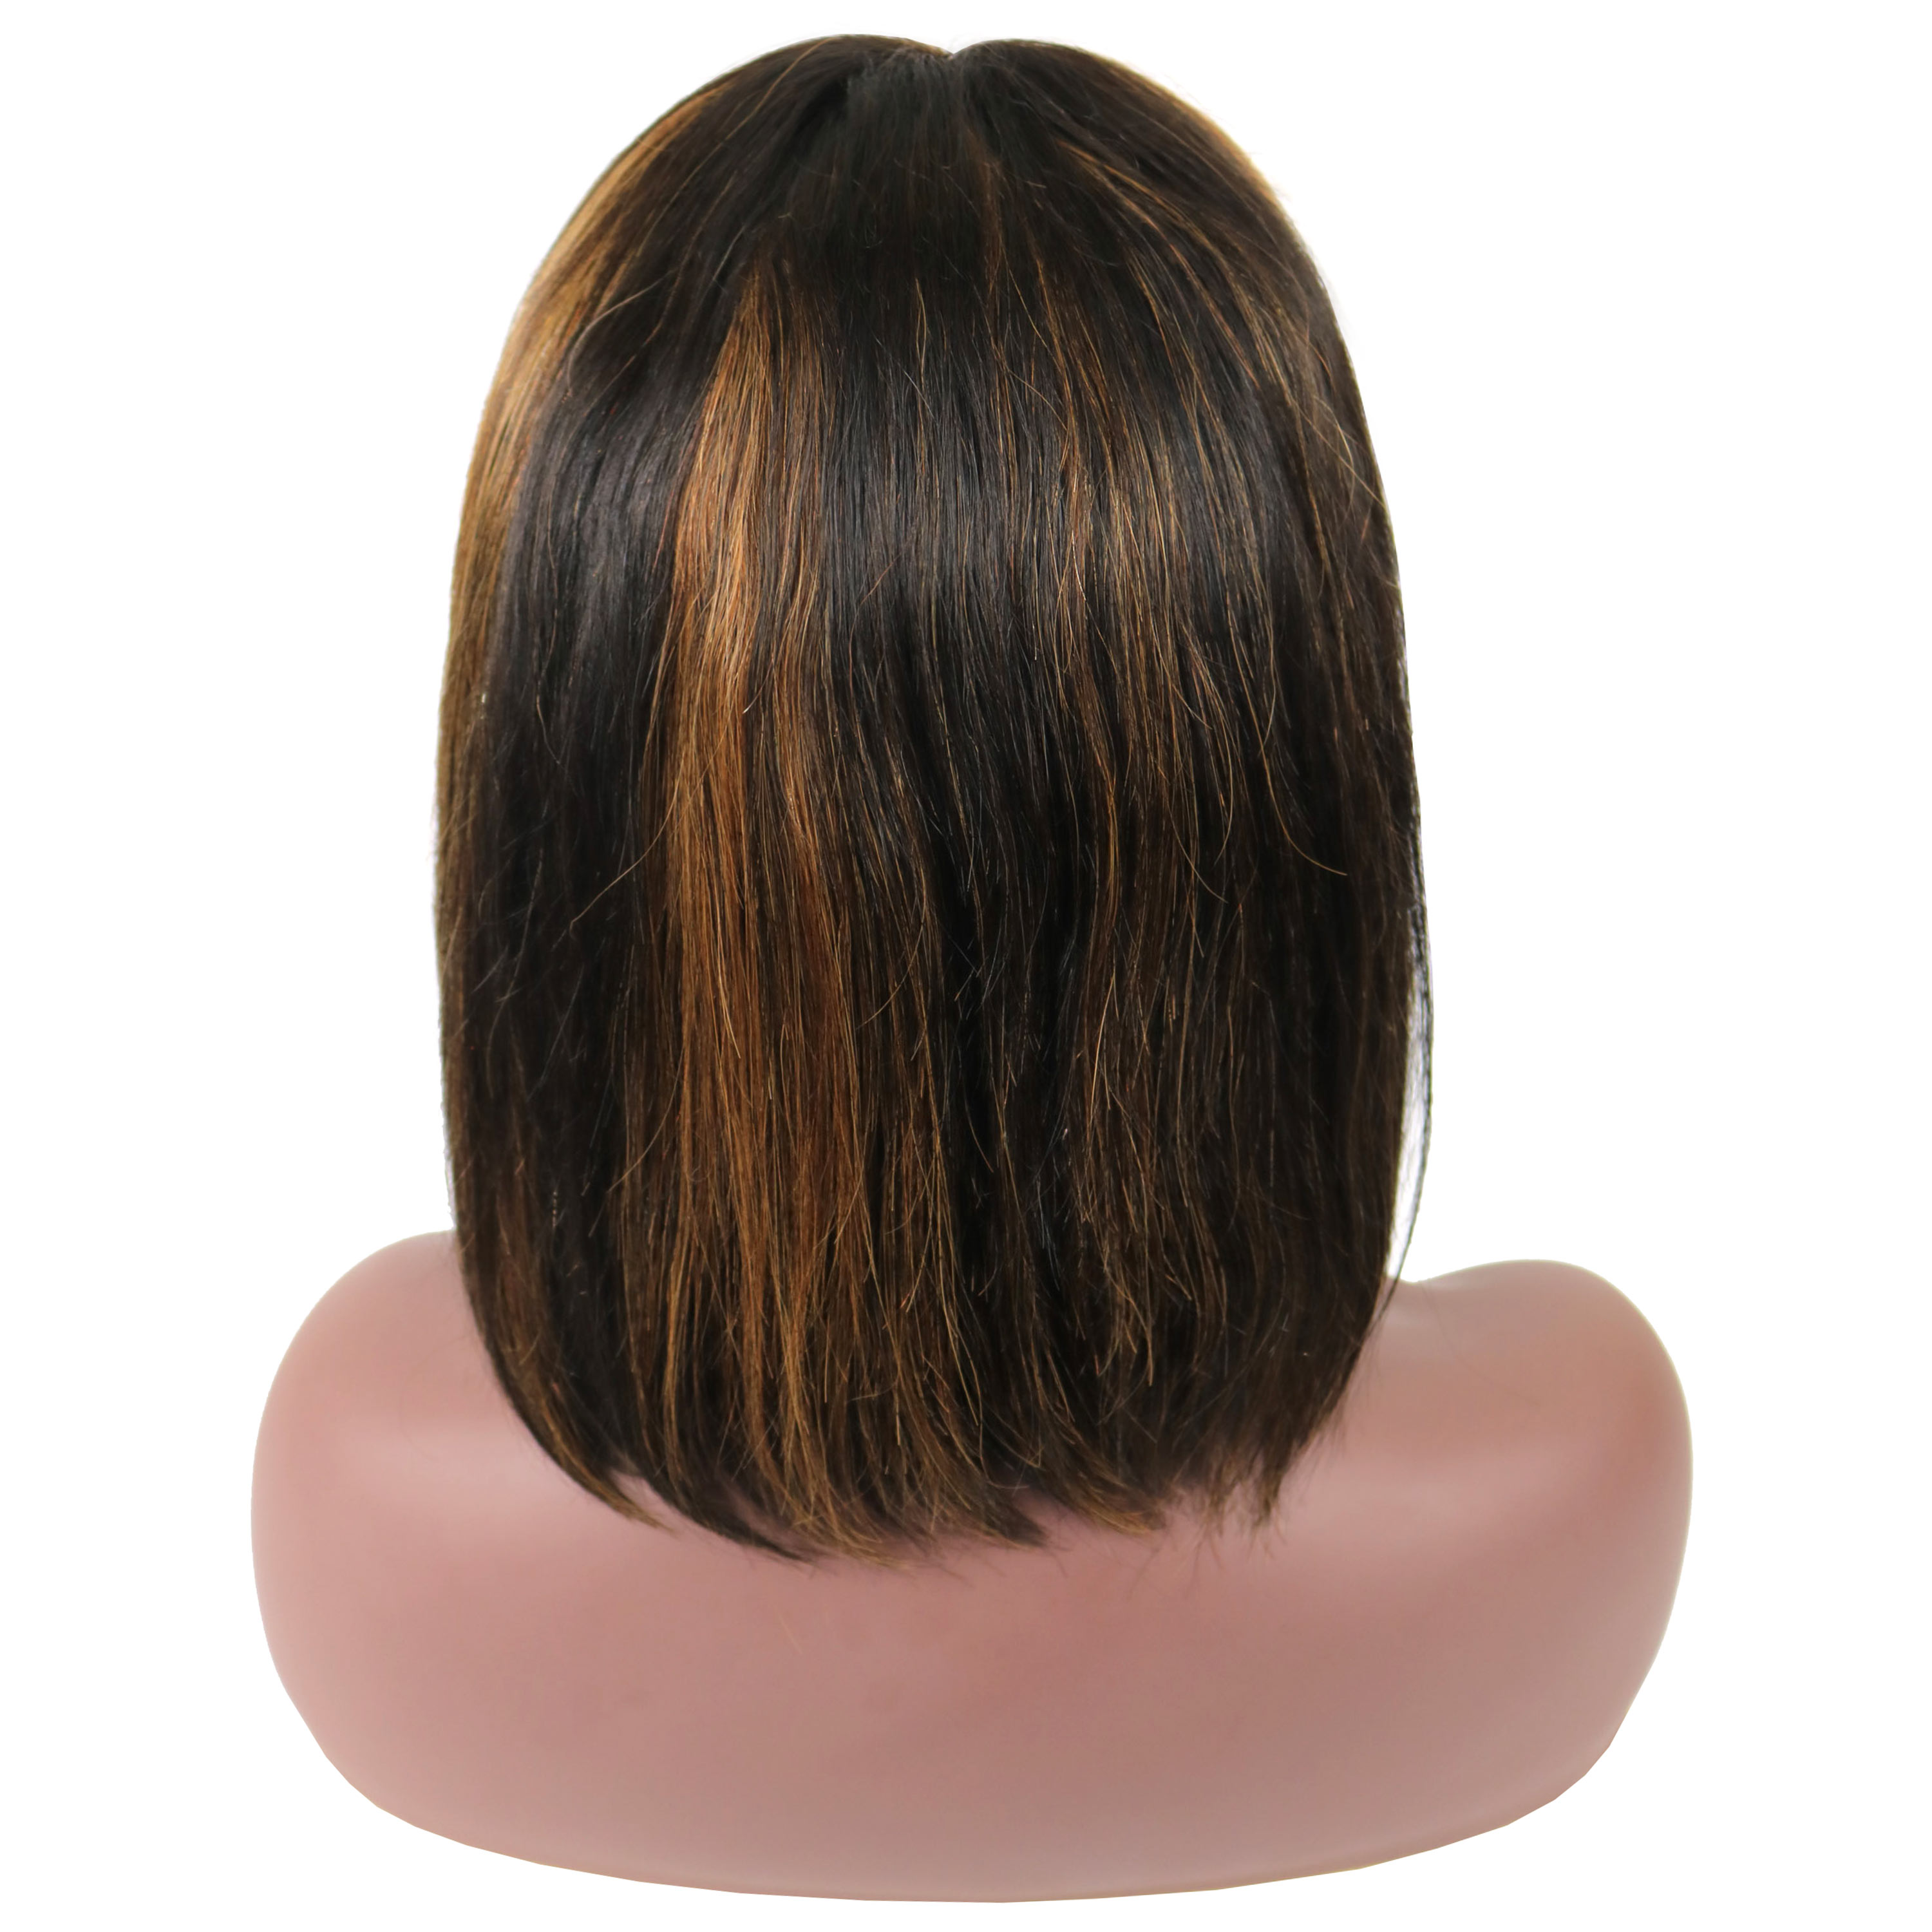 Gabrielle Union Medium Human Hair Straight Lace Front Cap 12 Inches 120% Wigs